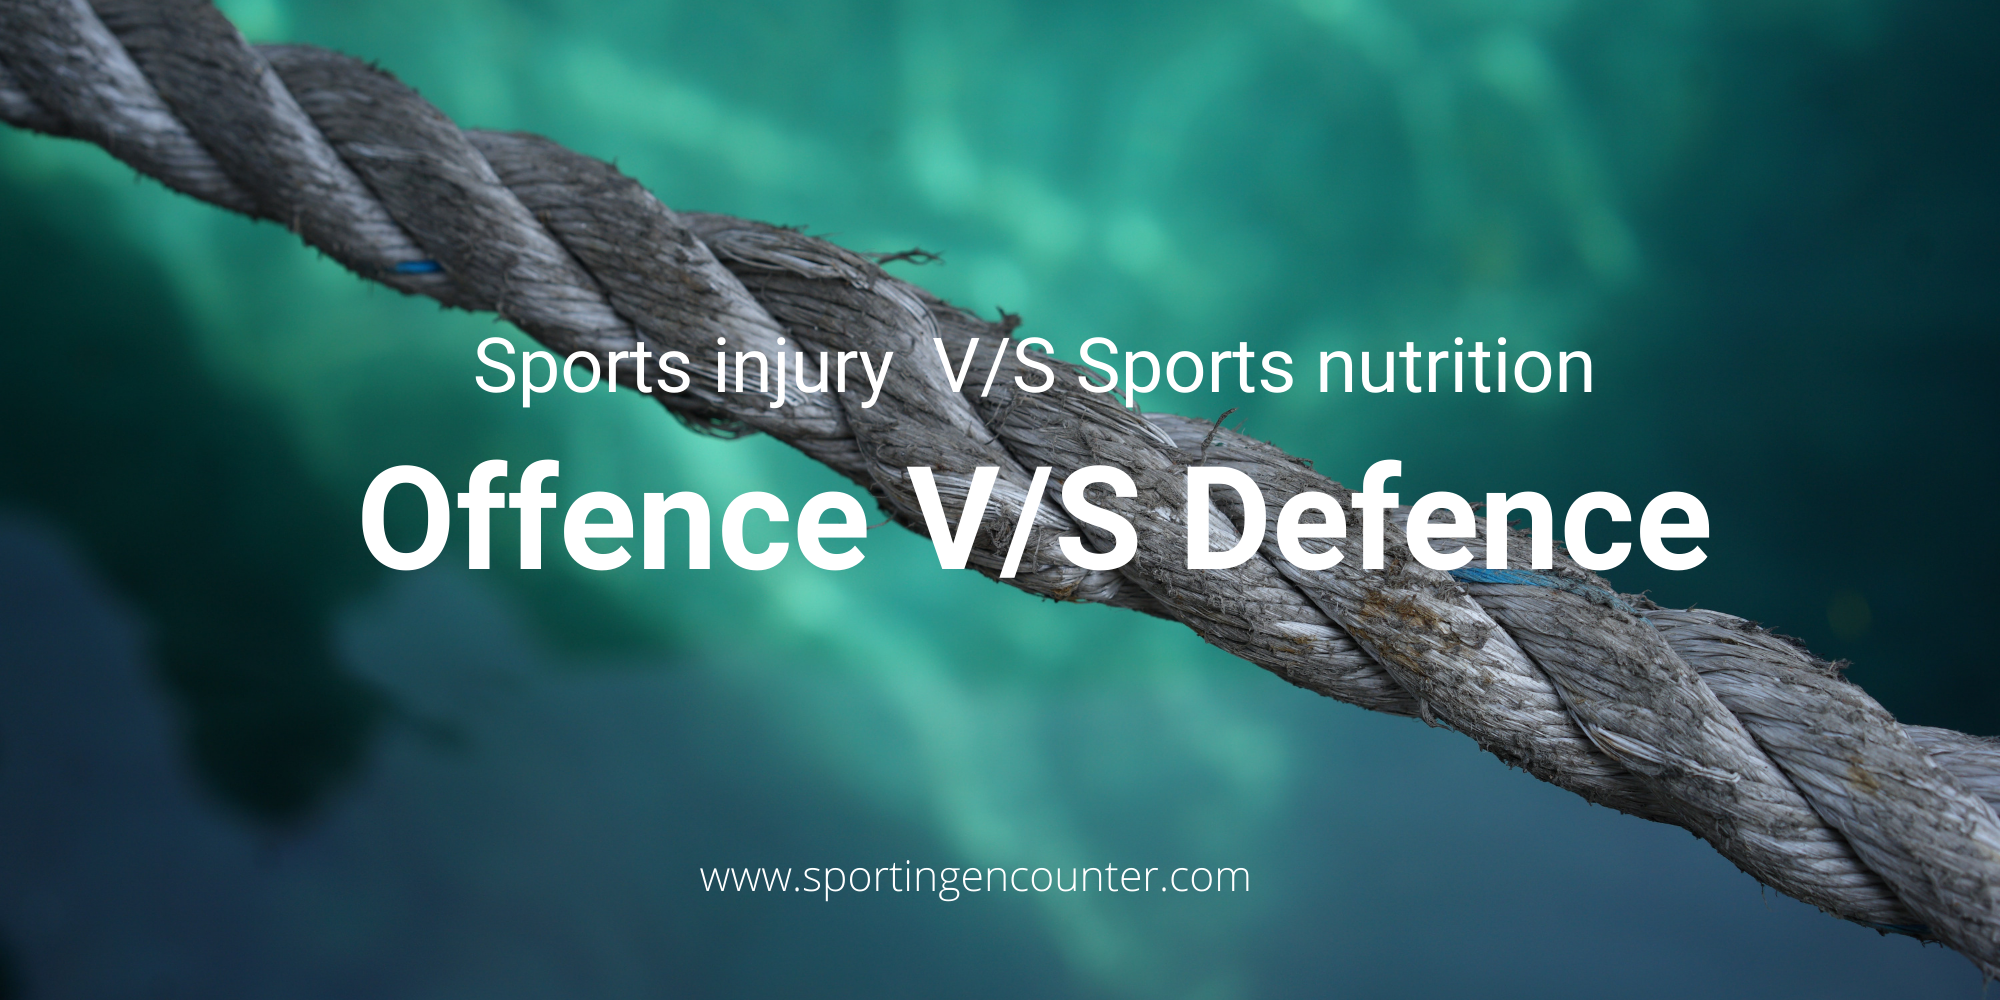 www.sportingencounter.com/sports-injury-vs-sports-nutrition/